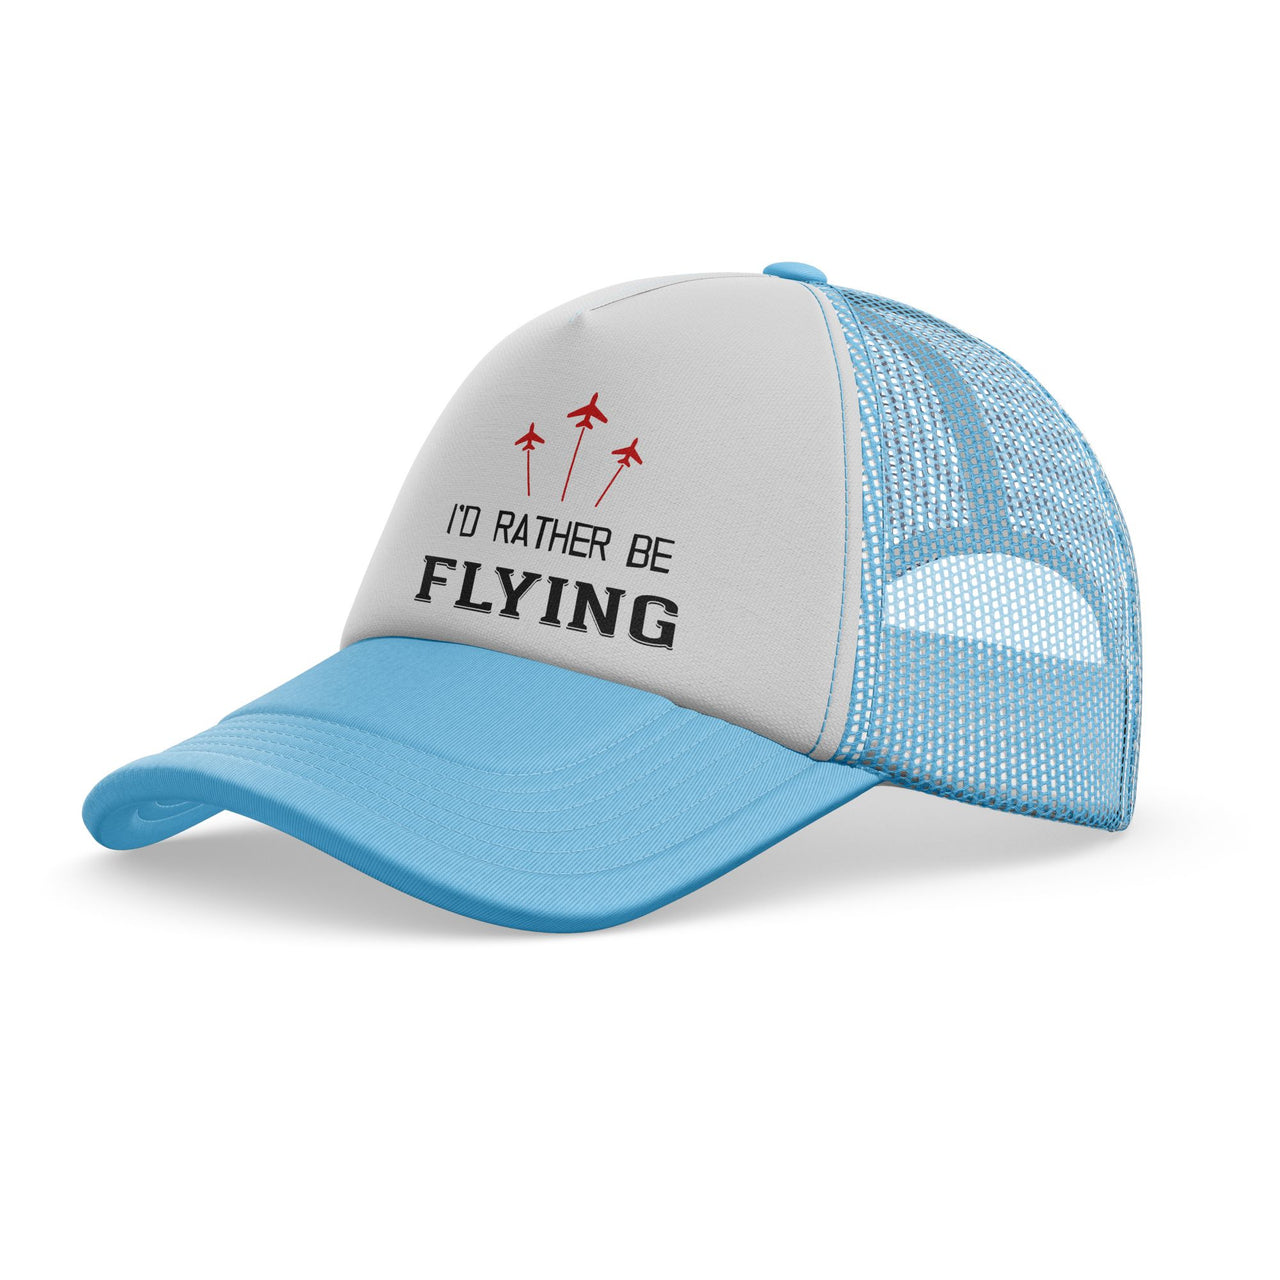 I'D Rather Be Flying Designed Trucker Caps & Hats